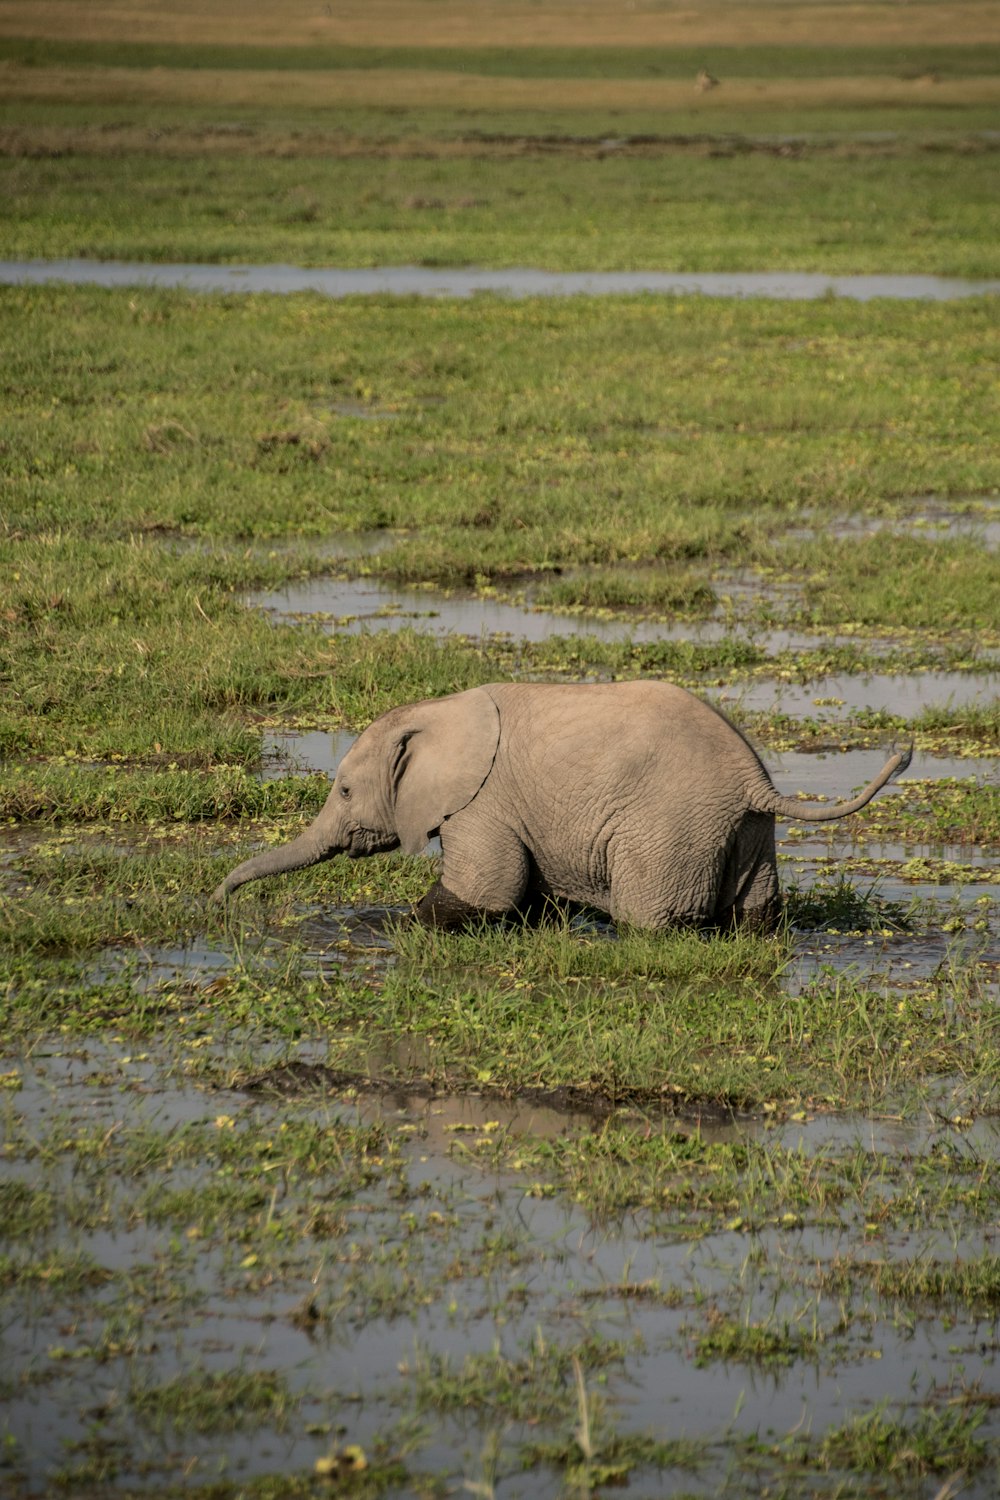 Un bebé elefante caminando por un campo fangoso